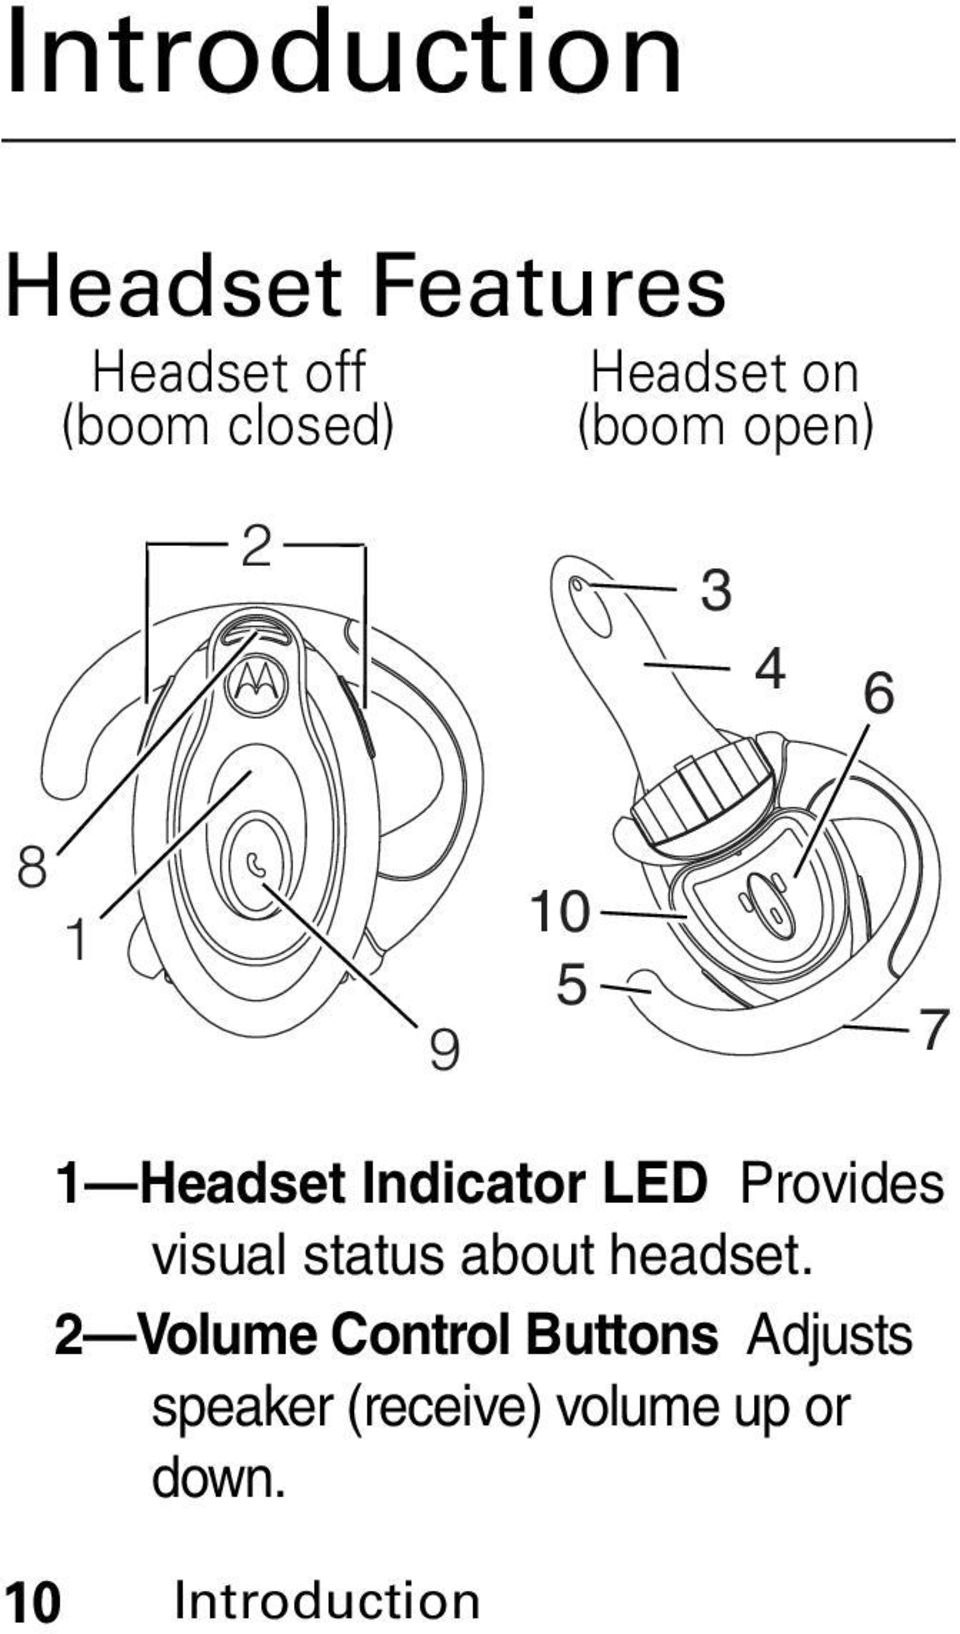 Indicator LED Provides visual status about headset.